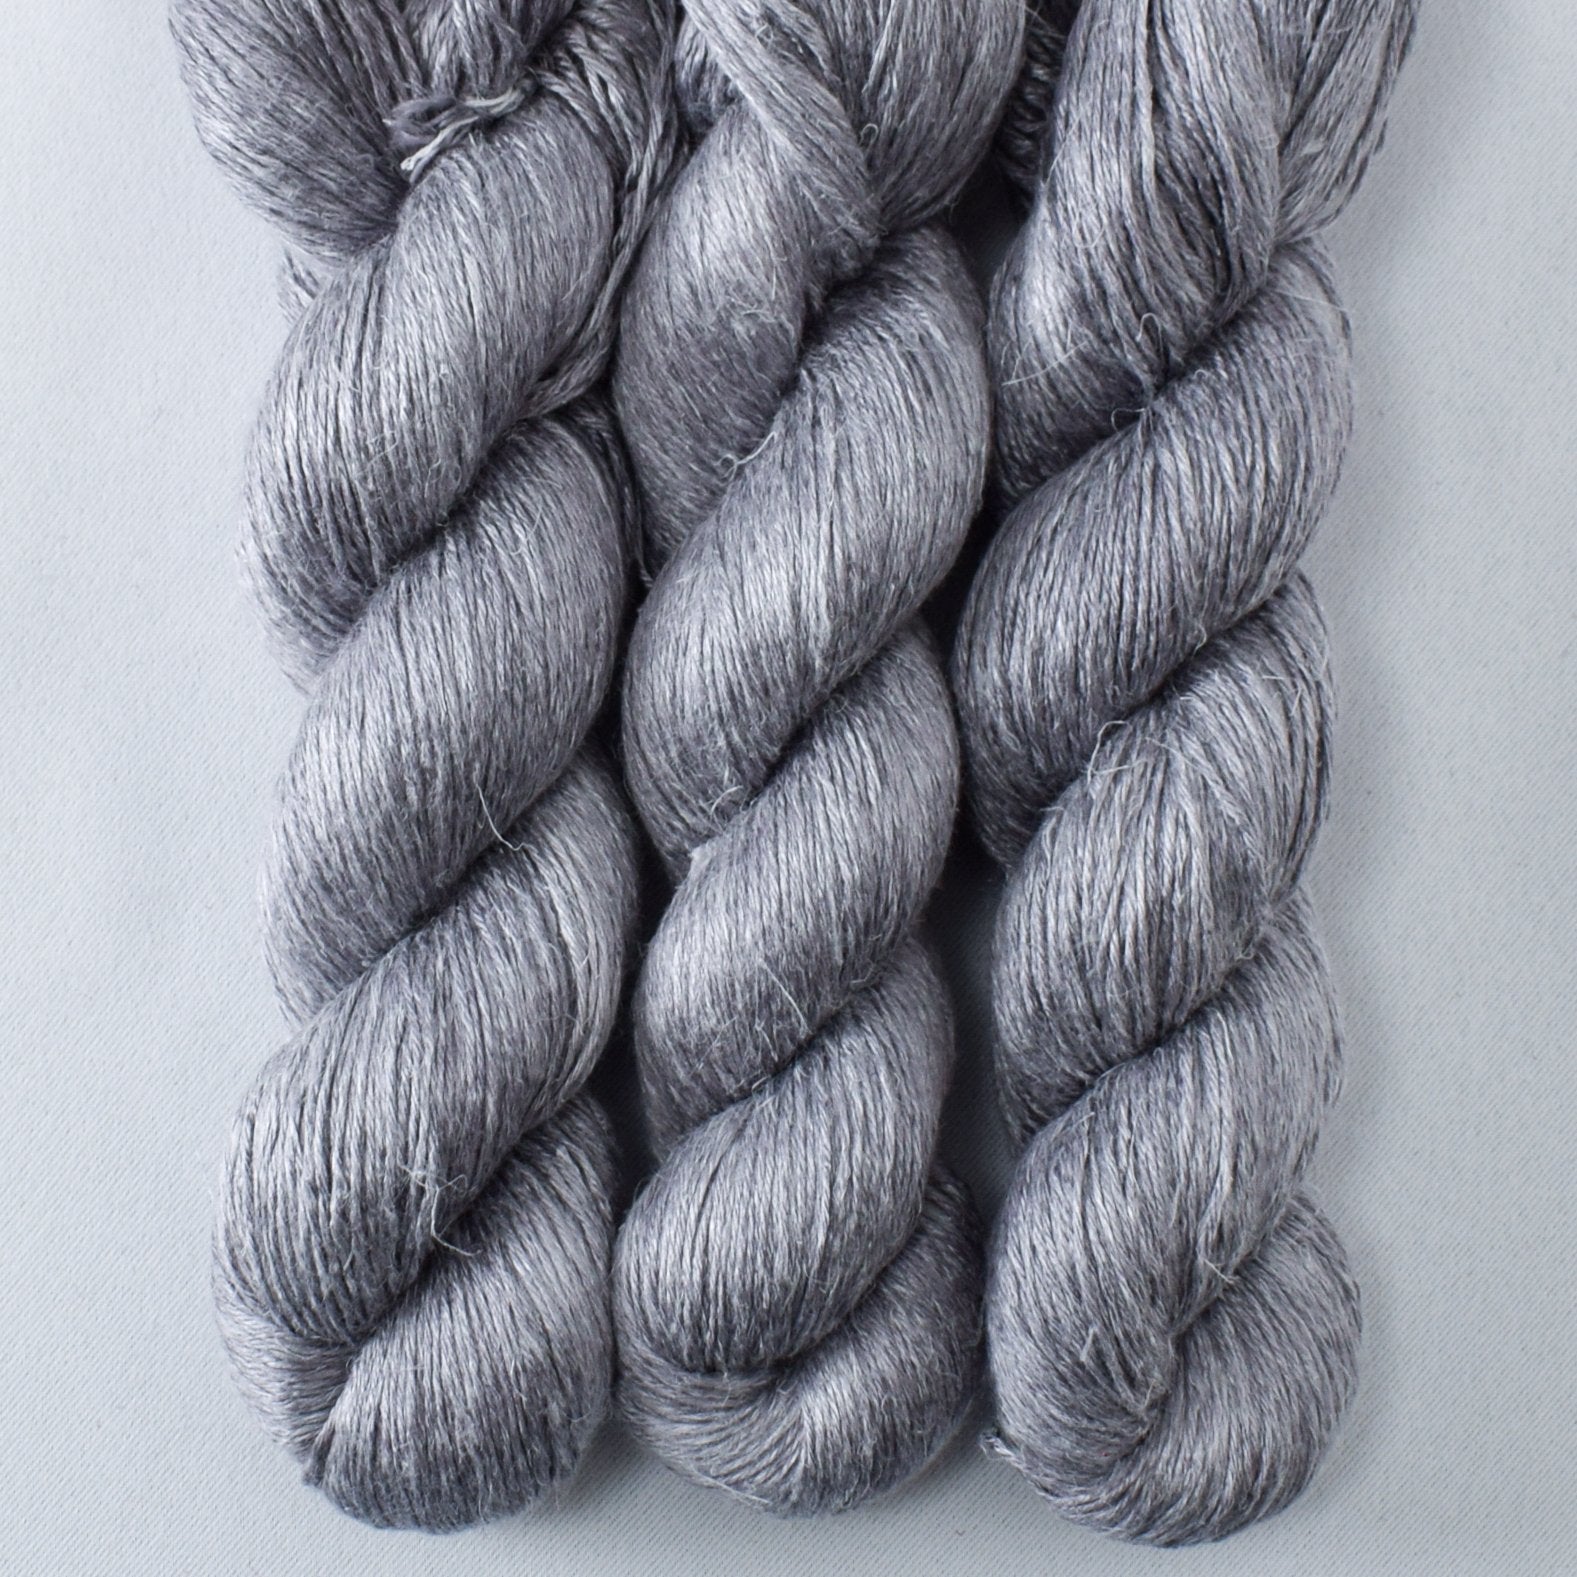 Oxidized Silver - Miss Babs Damask yarn